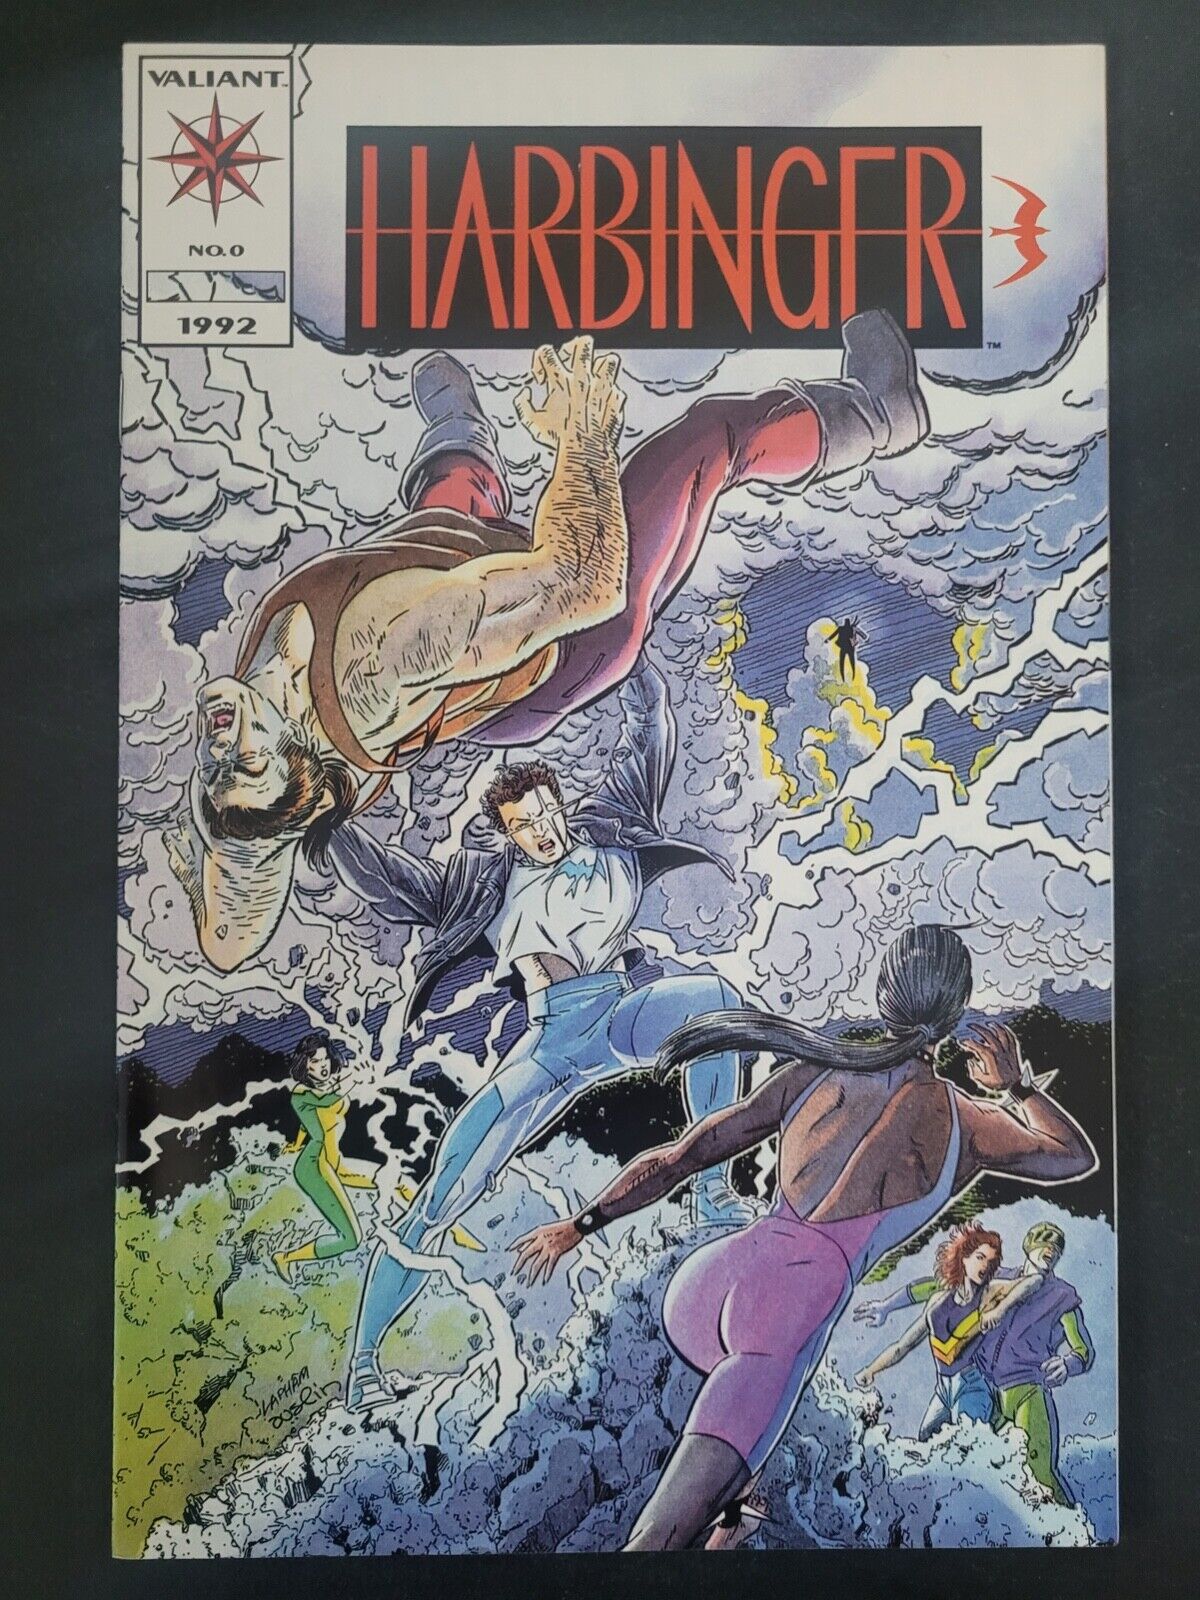 HARBINGER #0 (1992) VALIANT COMICS 1ST PRINTING BLUE COVER DAVID LAPHAM